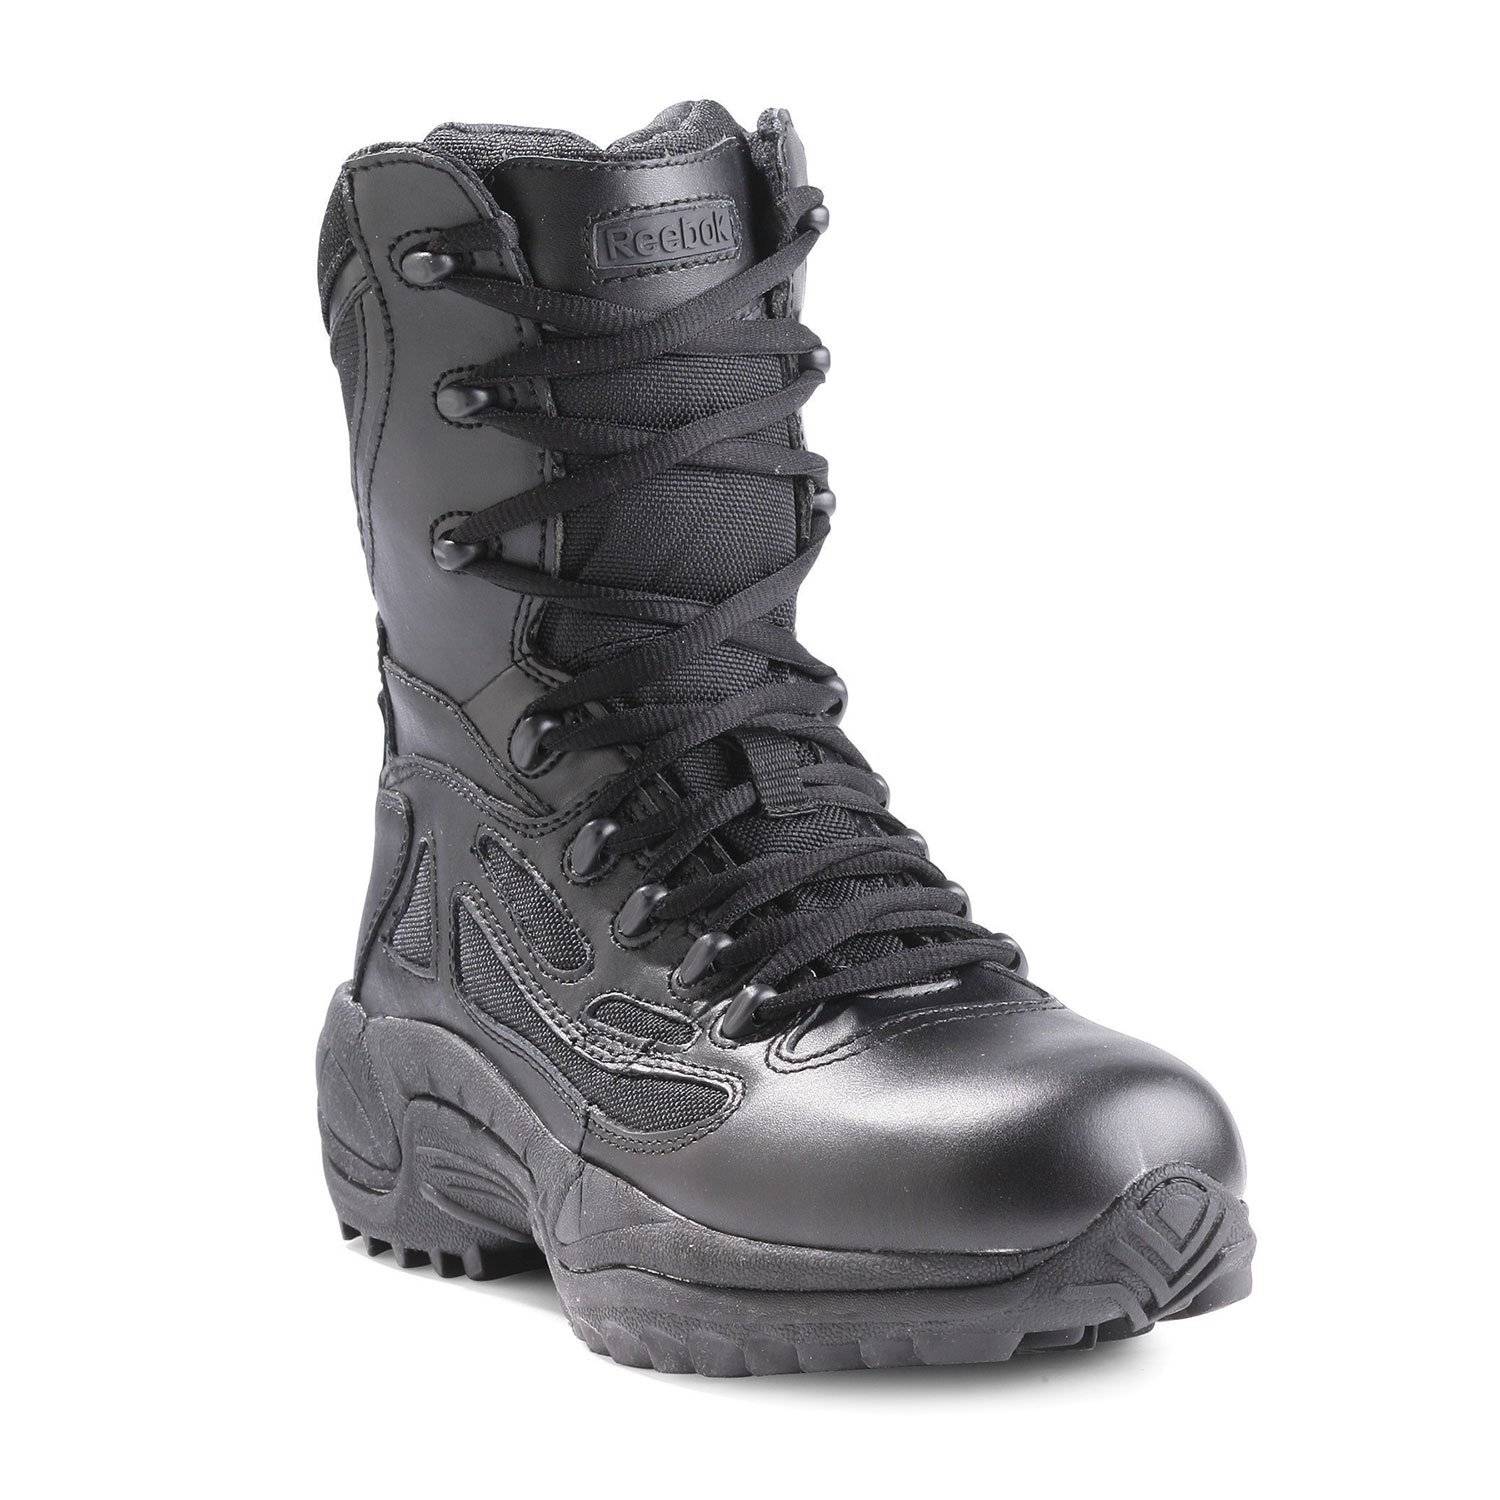 Selling - reebok zipper boots - OFF 68 